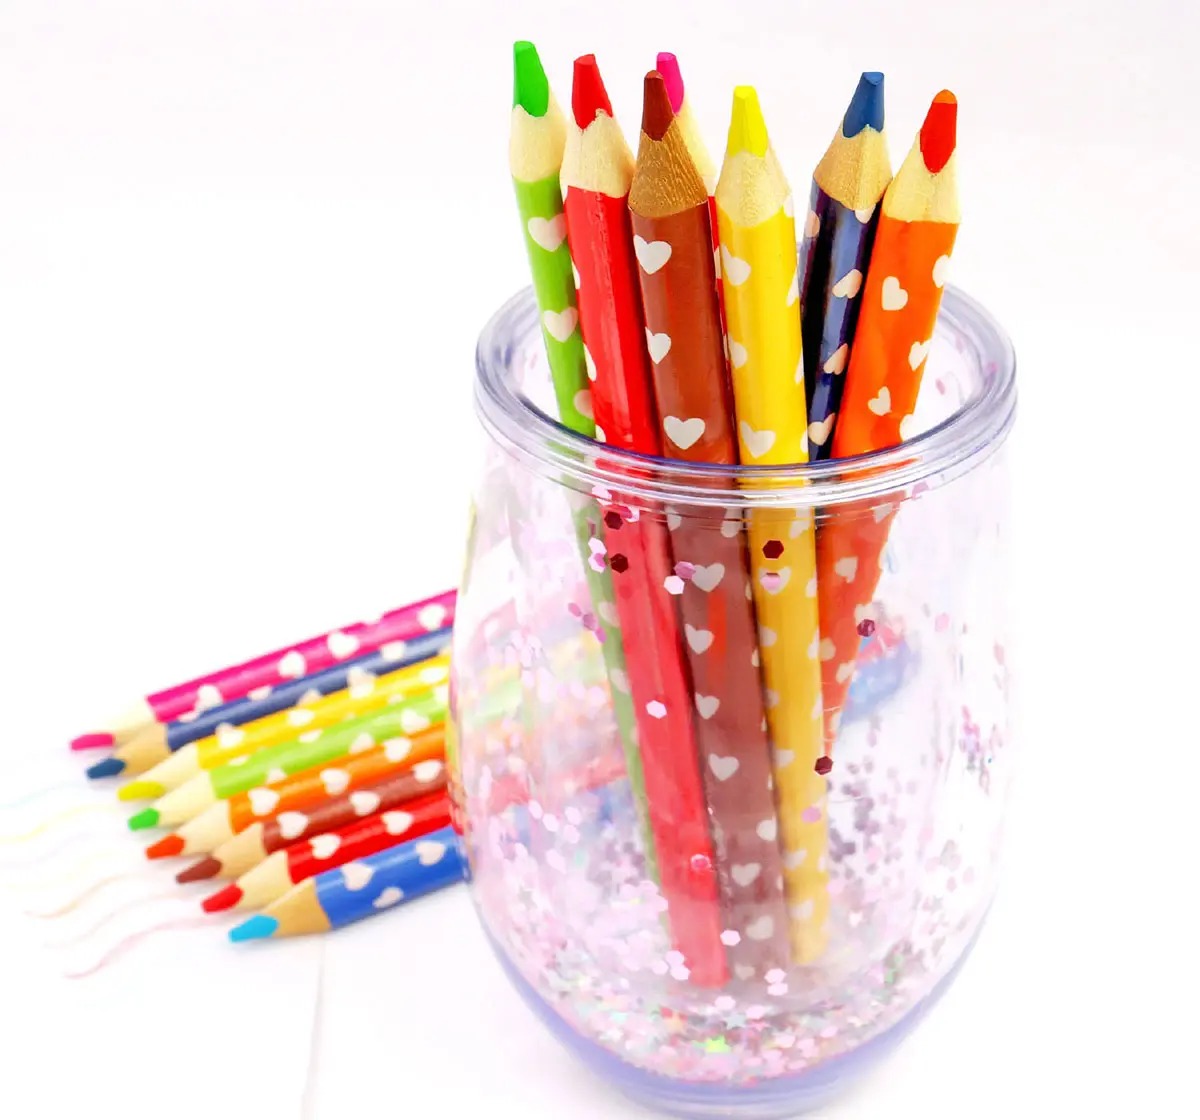 Scoobies Little Fingers Chunky Coloured Pencils Set of 8 Multicolour, 3Y+